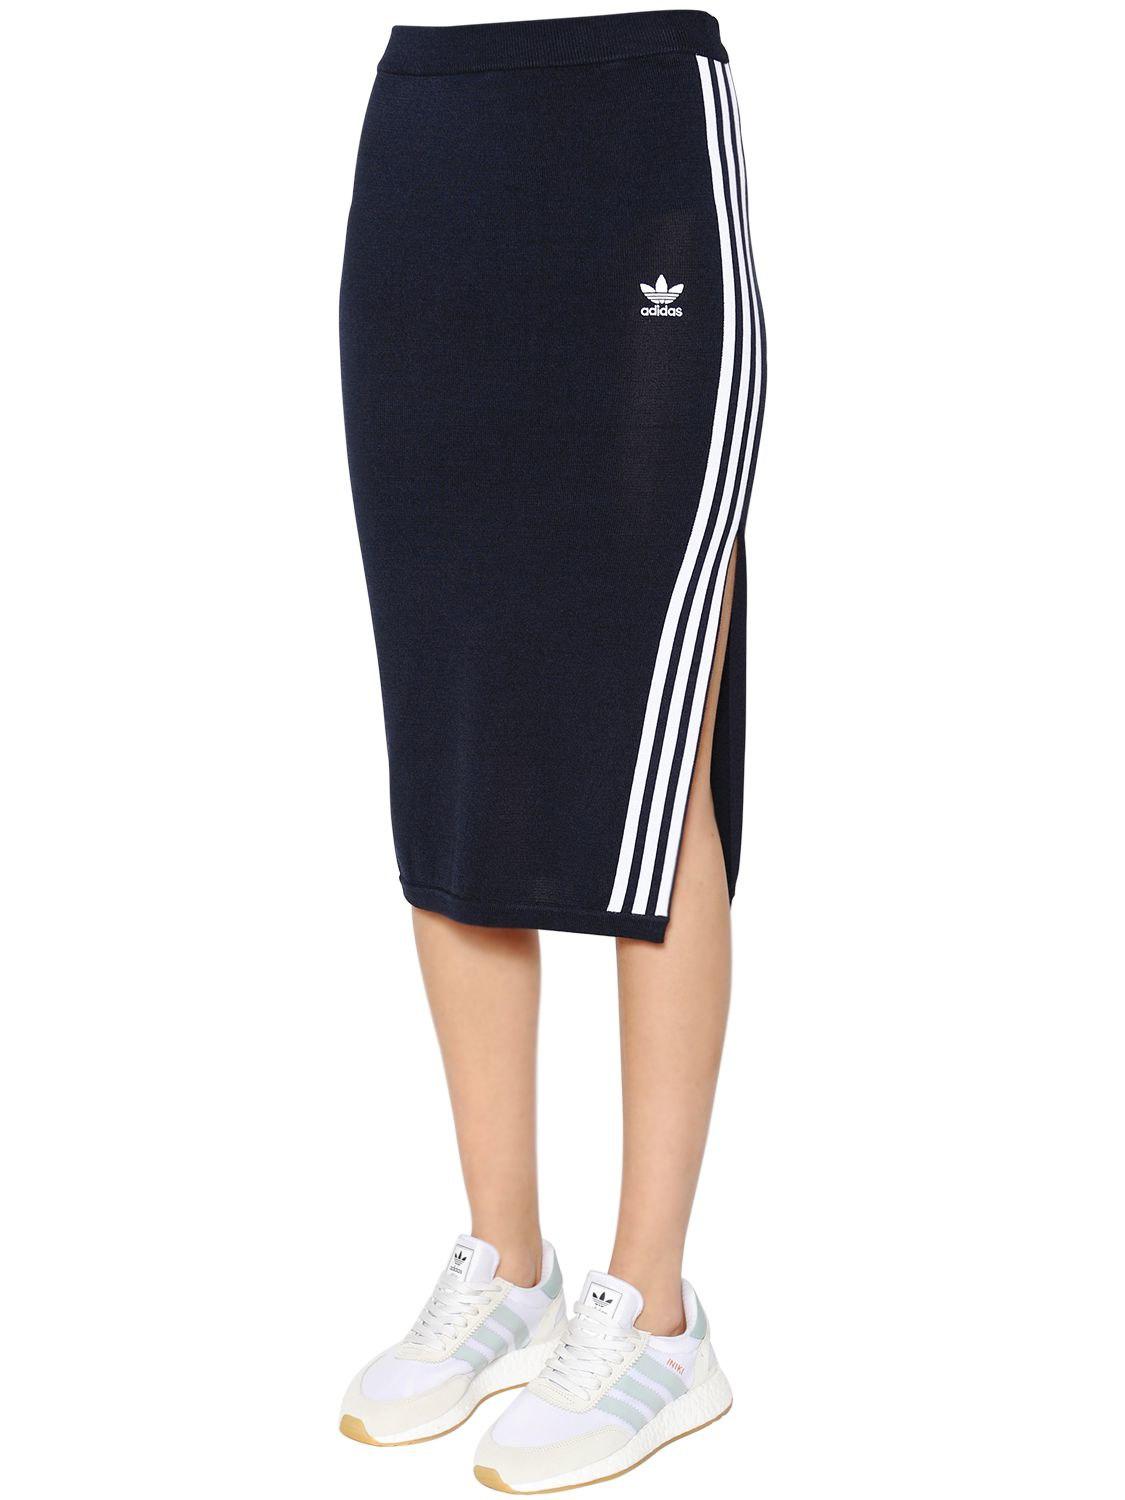 adidas Originals 3 Stripes Knit Midi Skirt in Navy (Blue) | Lyst UK